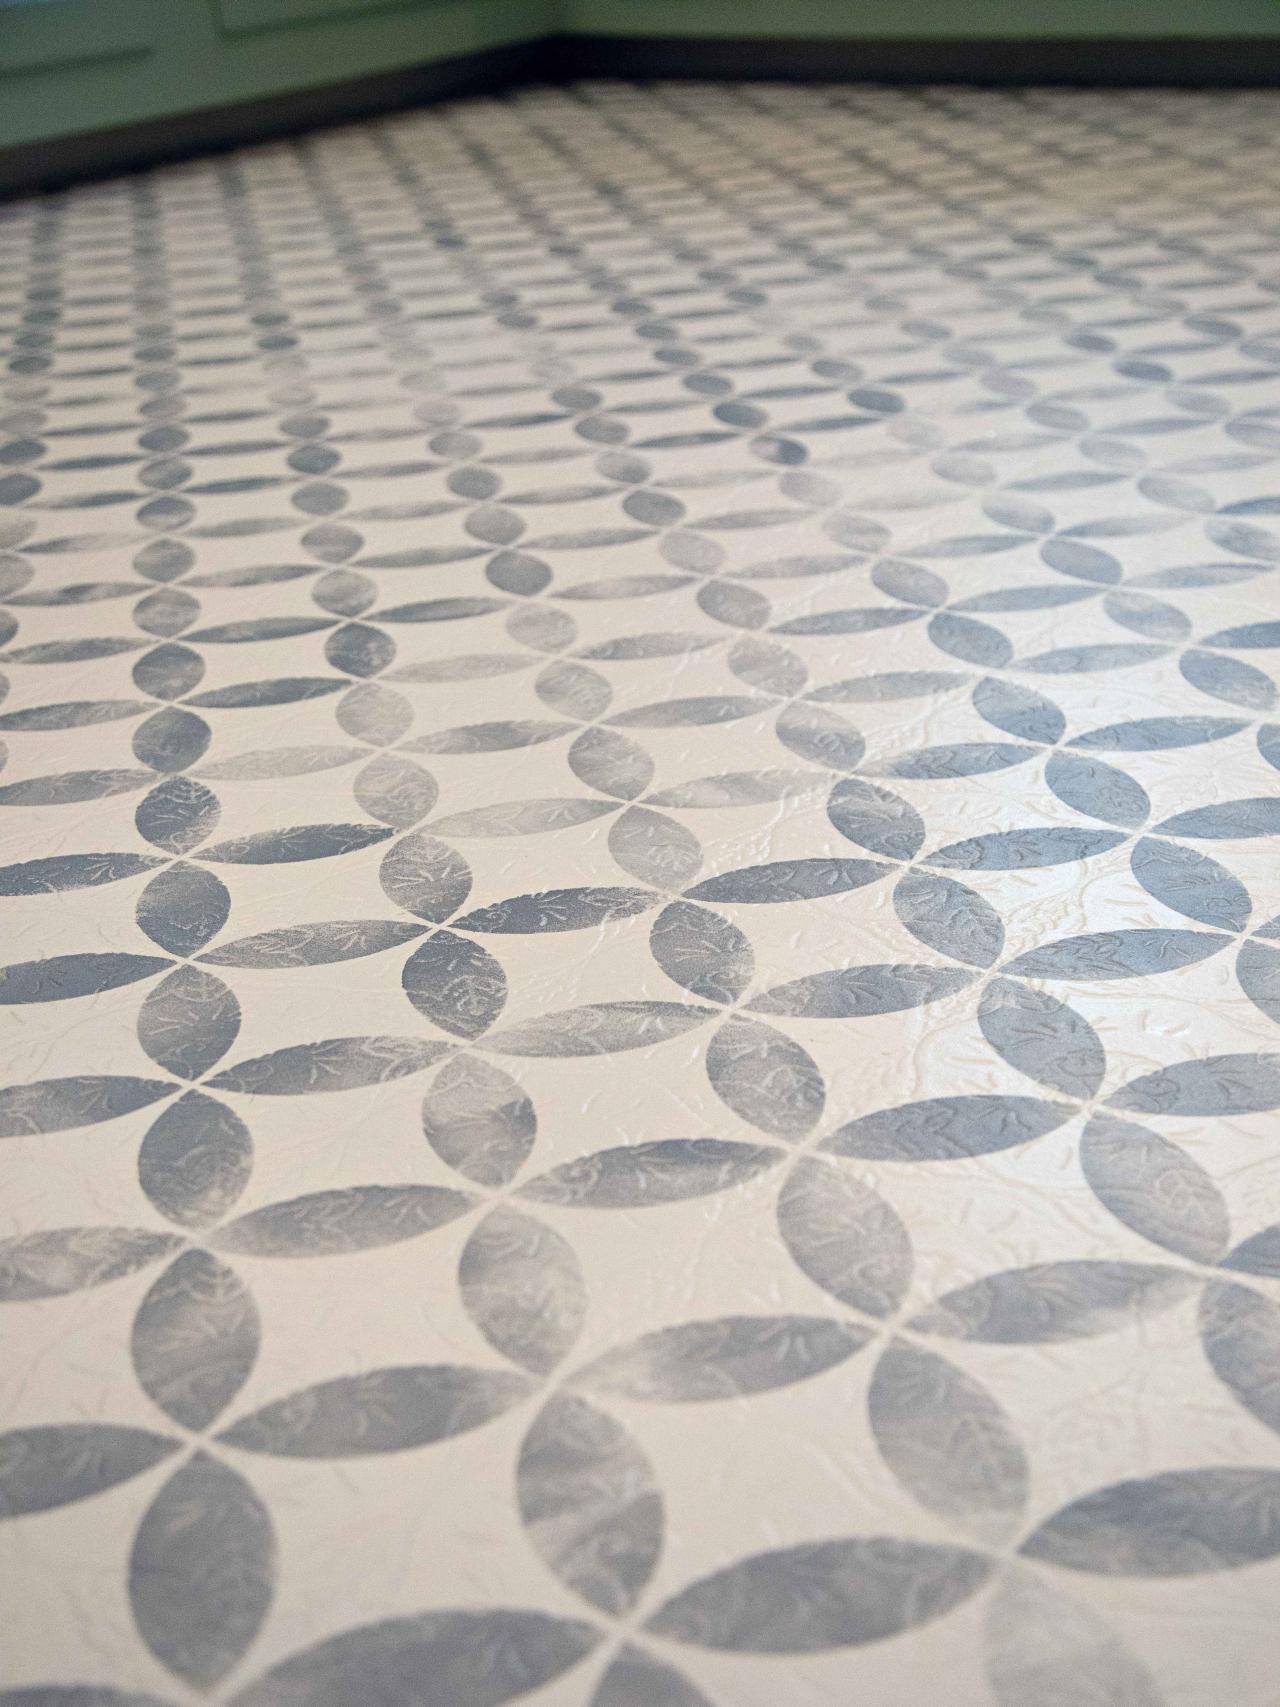 How To Paint Old Vinyl Floors Look, How To Clean Old Tile Floors